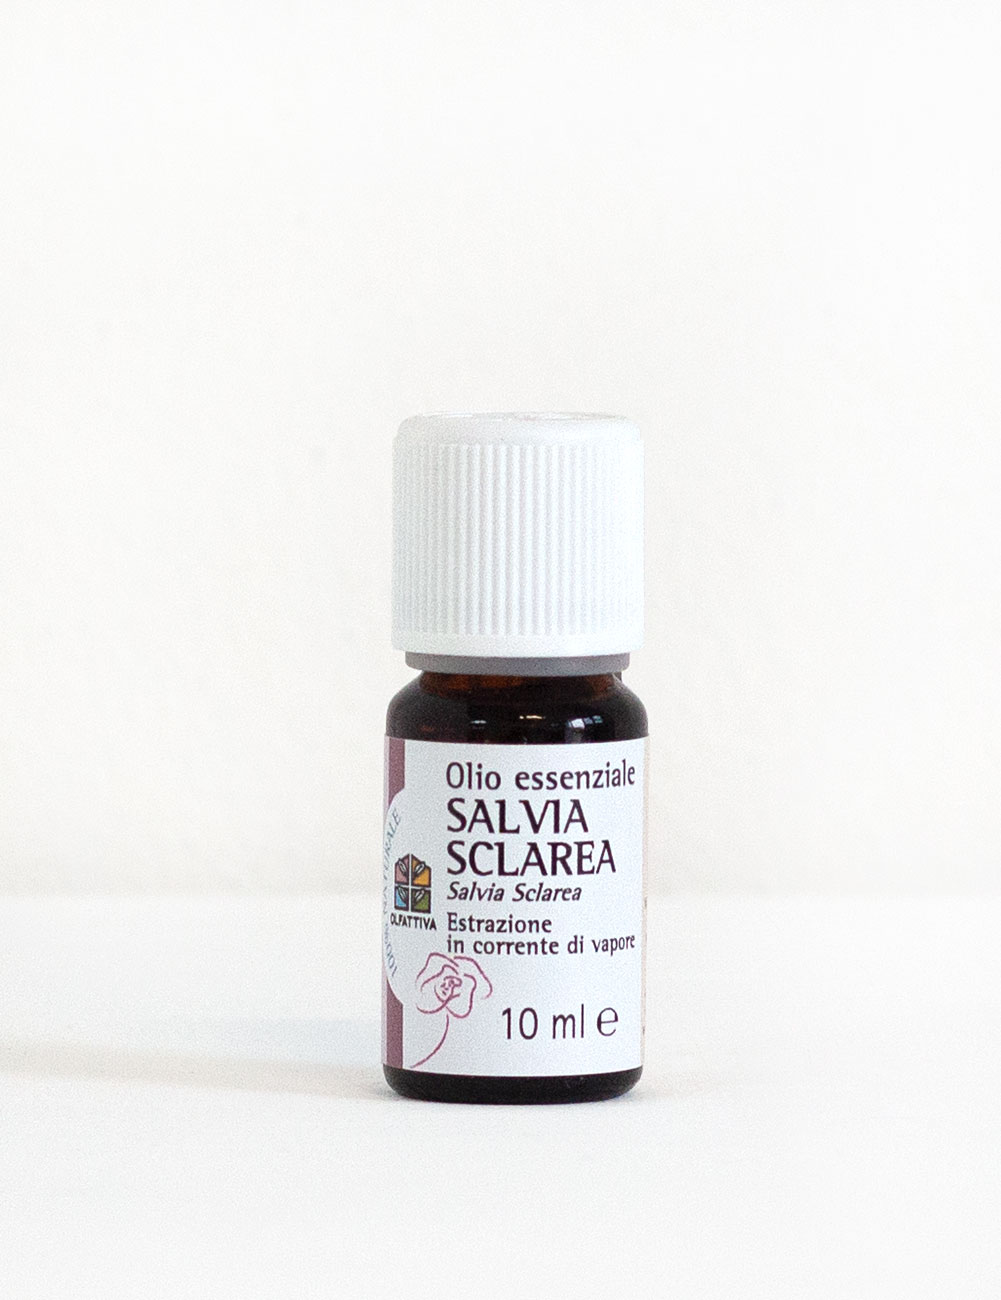 Olio essenziale Salvia Sclarea 10ml - Olfattiva